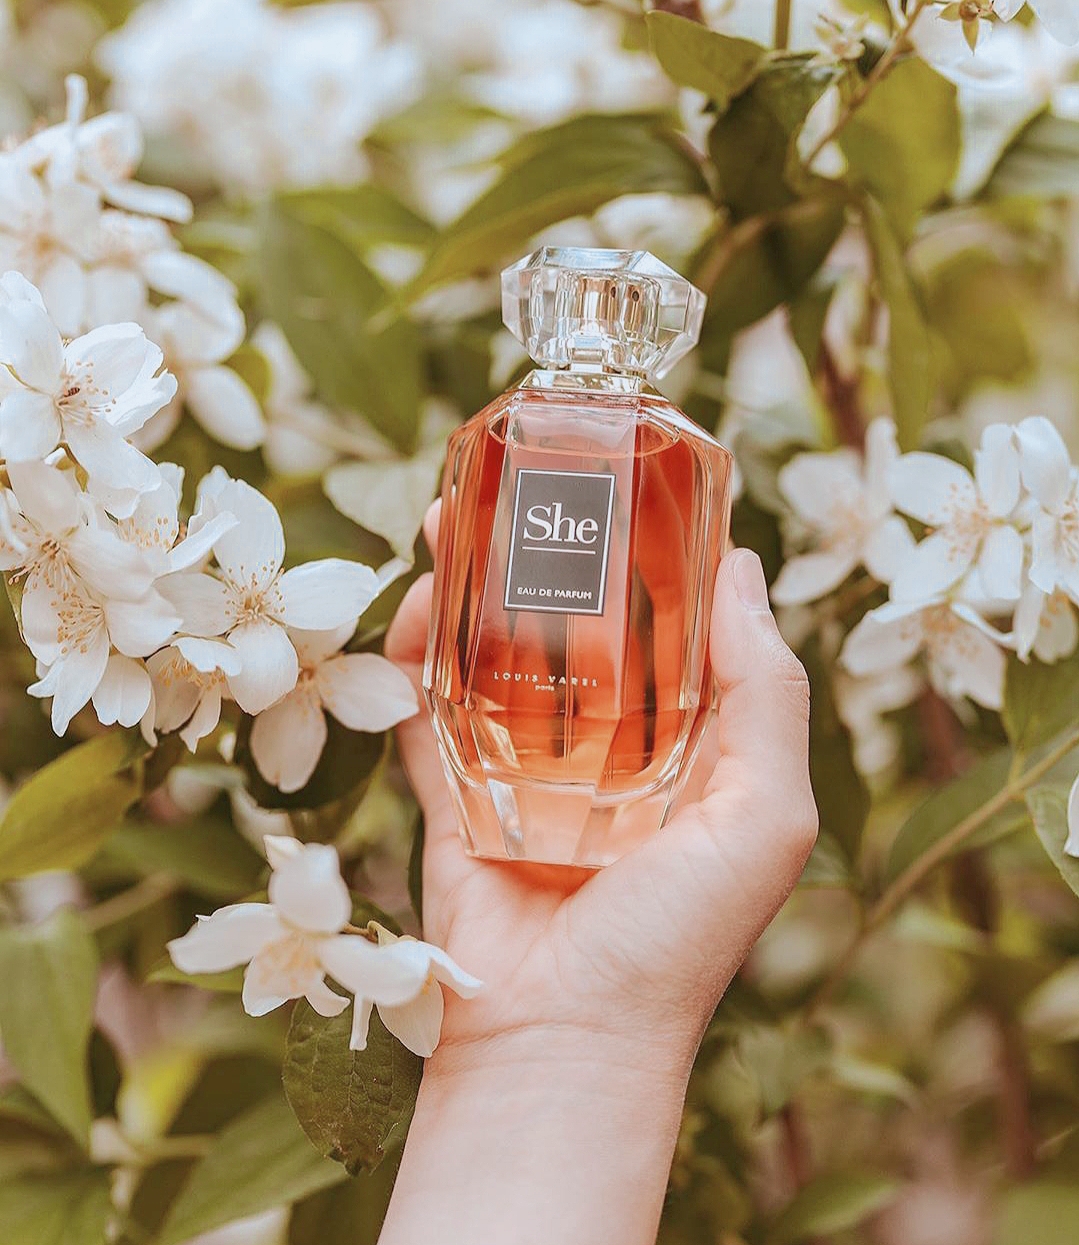 She Louis Varel perfume - a fragrance for women 2019